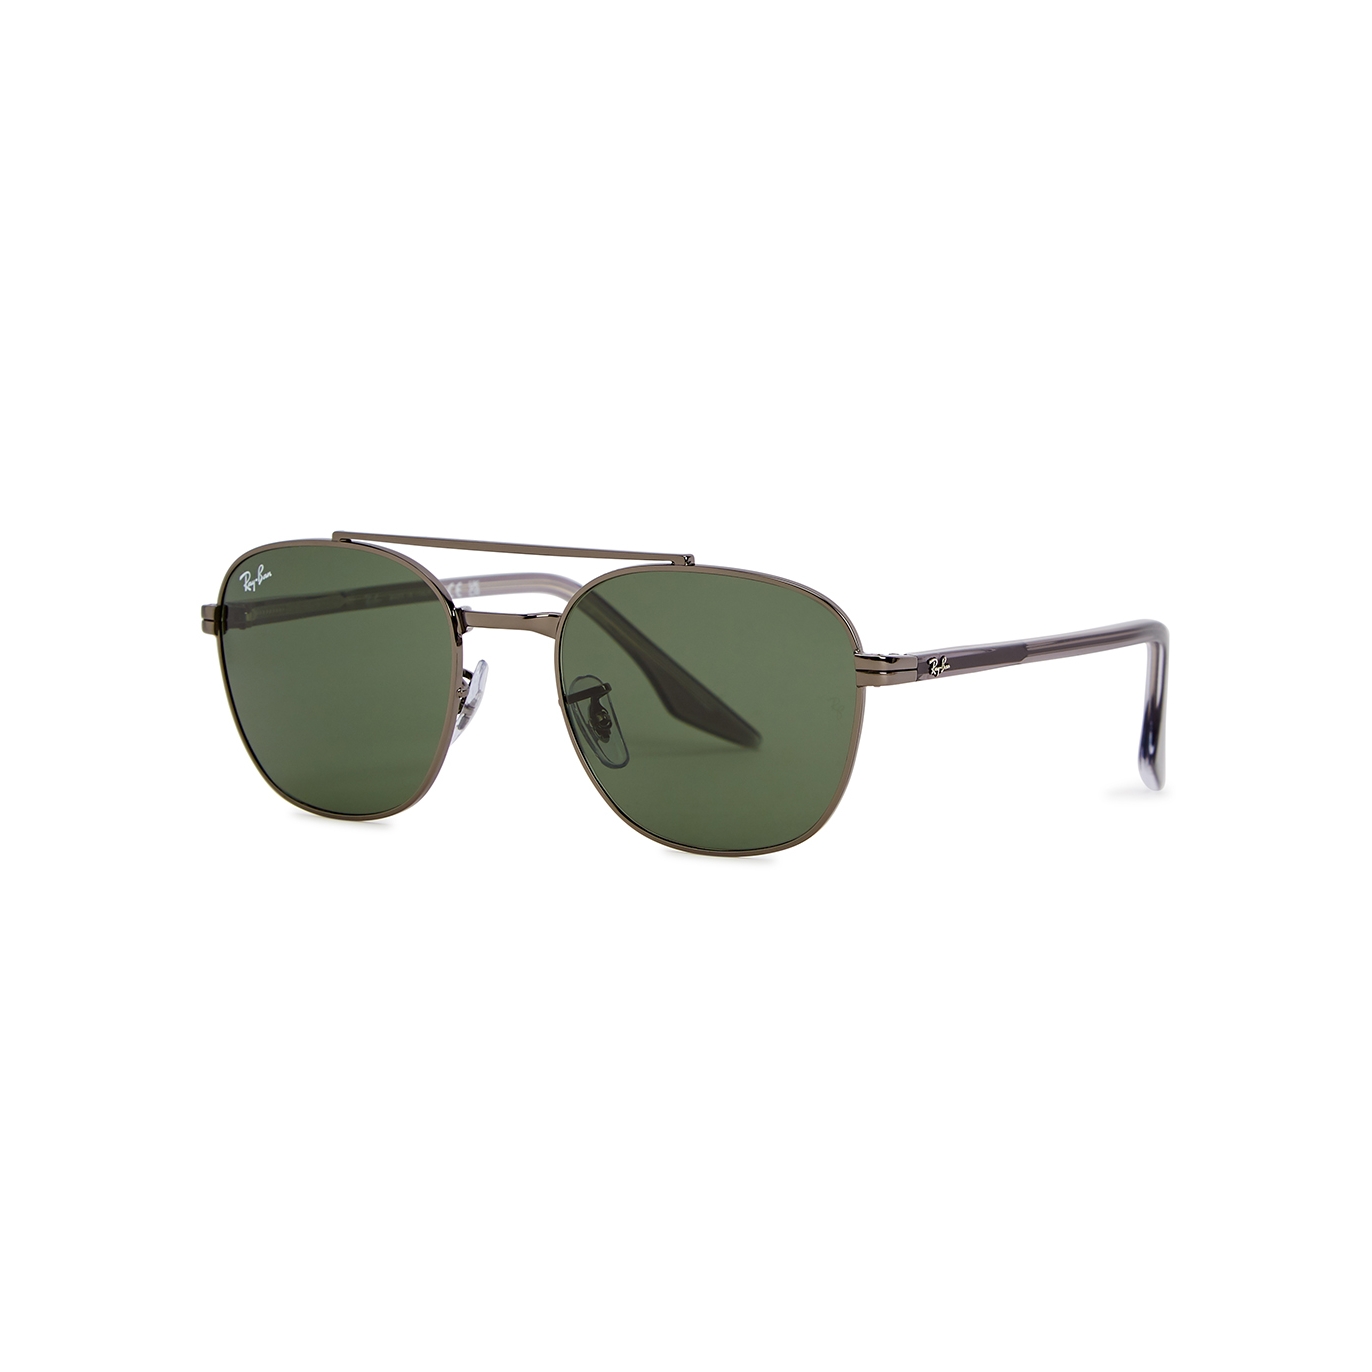 Ray-ban Gunmetal Aviator-style Sunglasses - Dark Grey